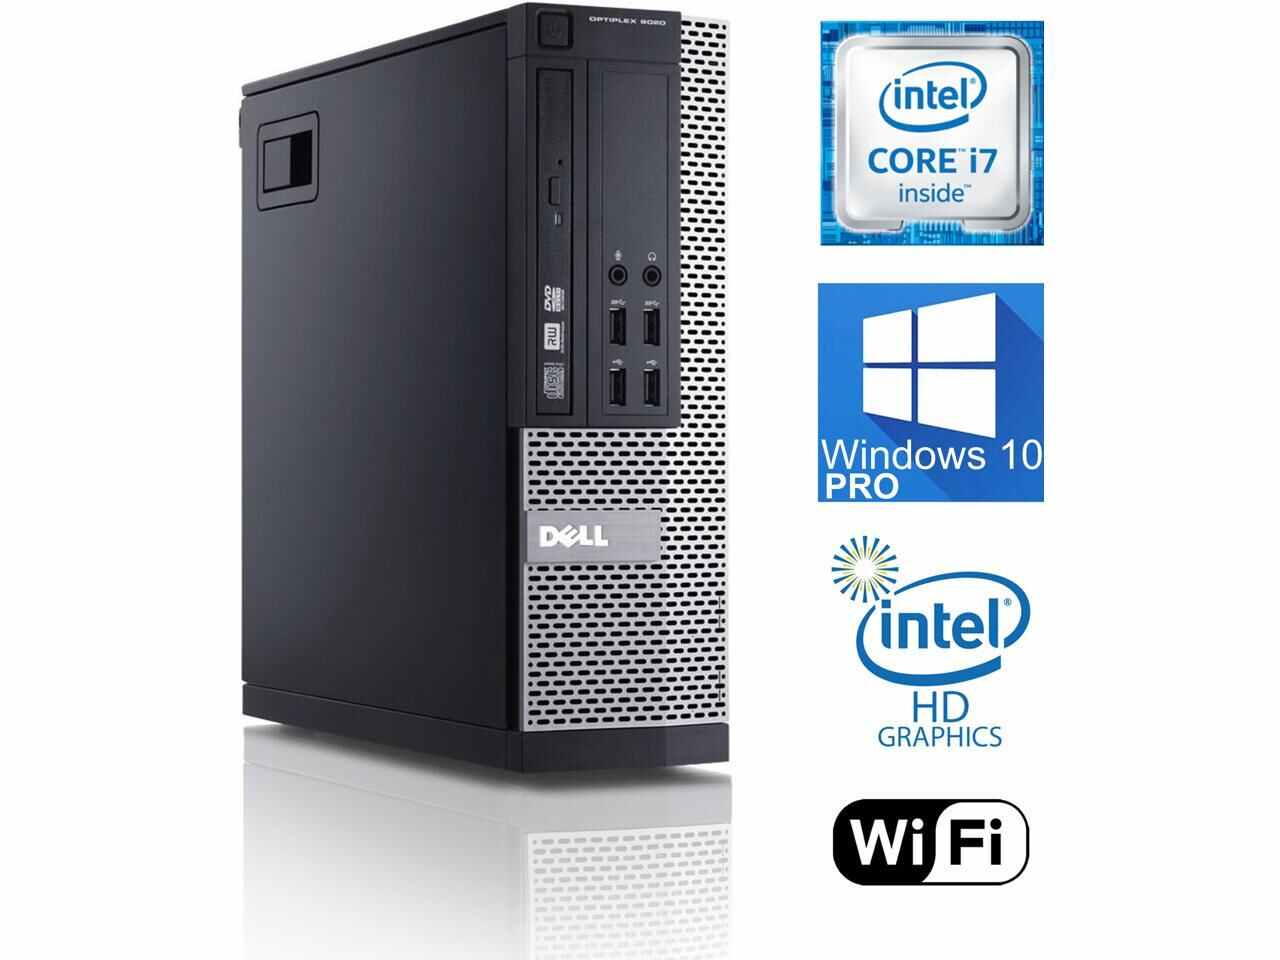 Dell 9020 SFF Desktop, Quad-Core i7 4770 3.4, 16GB RAM, 256GB SSD, Intel HD Graphics 4600 4K 3-Monitor Support, USB 3, WiFi, Windows 10 Pro, Bluetooth, HDMI, DVD